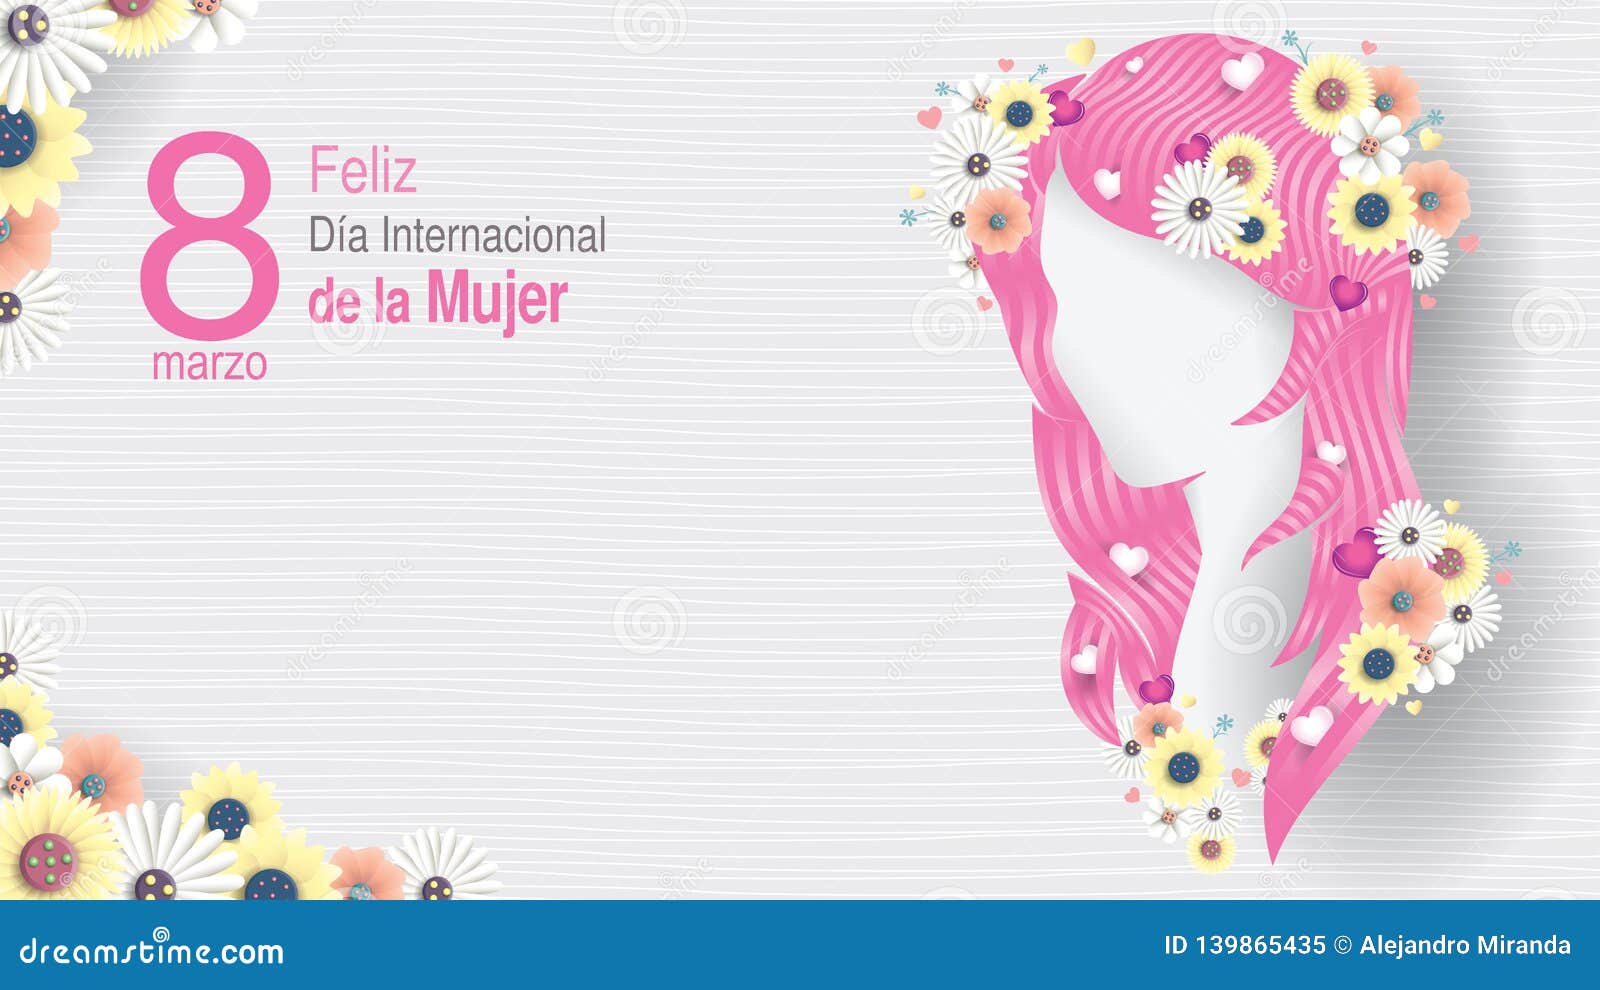 greeting card of dia international de la mujer - international women s day in spanish language. silhouette of woman head